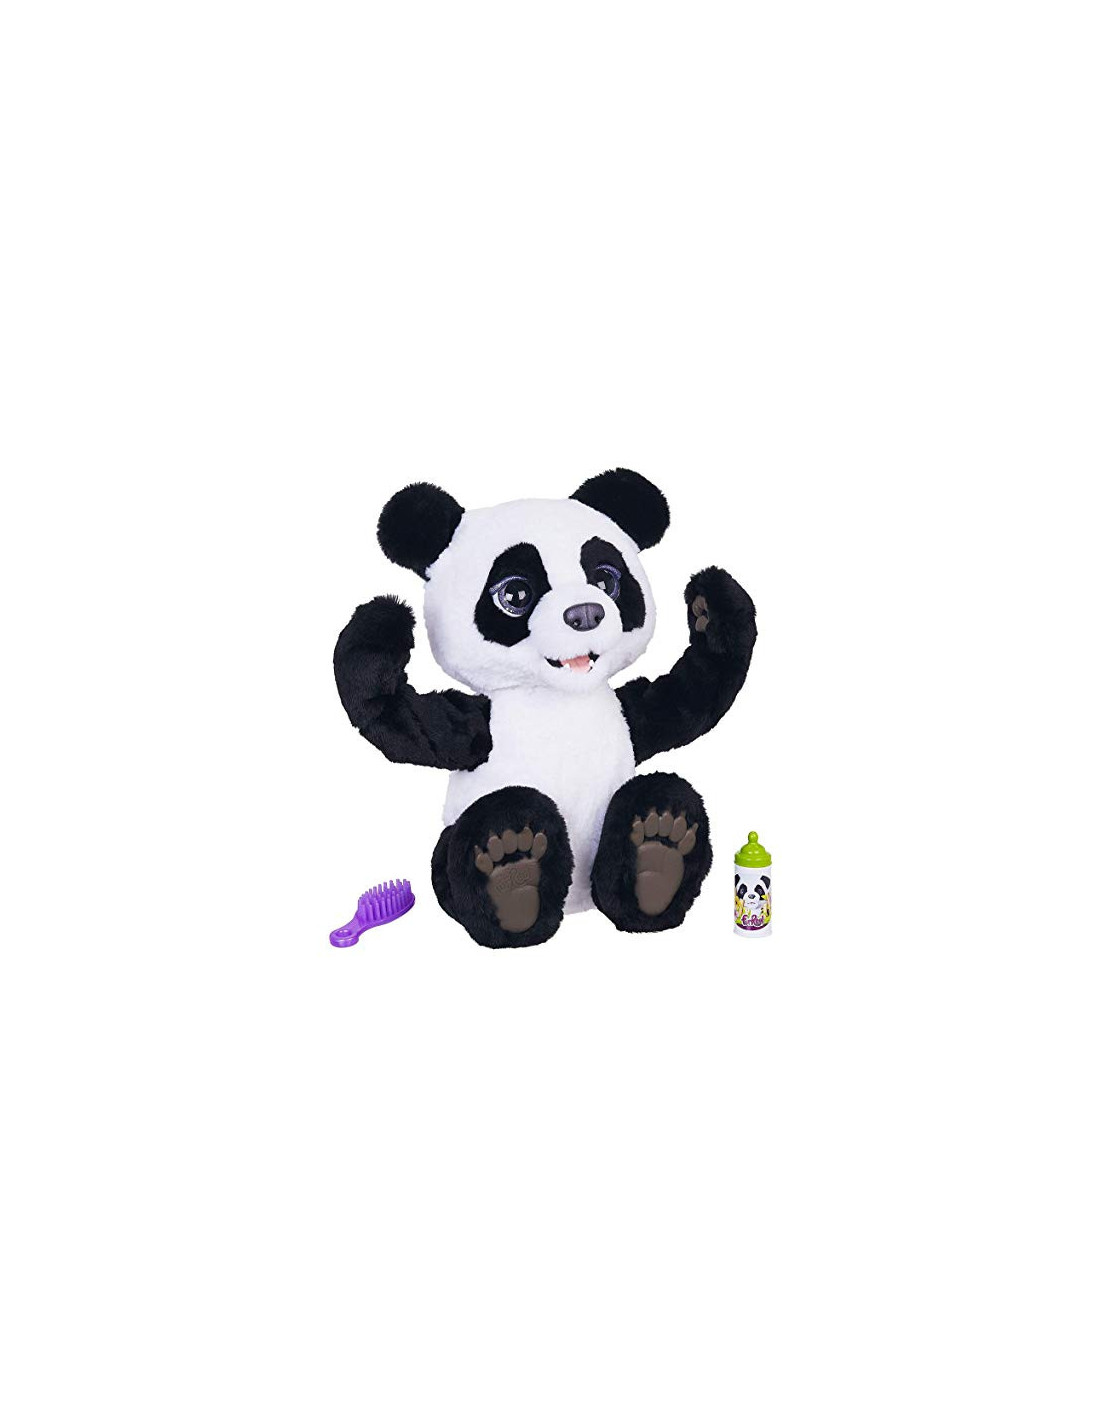 FurReal Friends - Peluche Interactive Cubby - Plum, le Panda